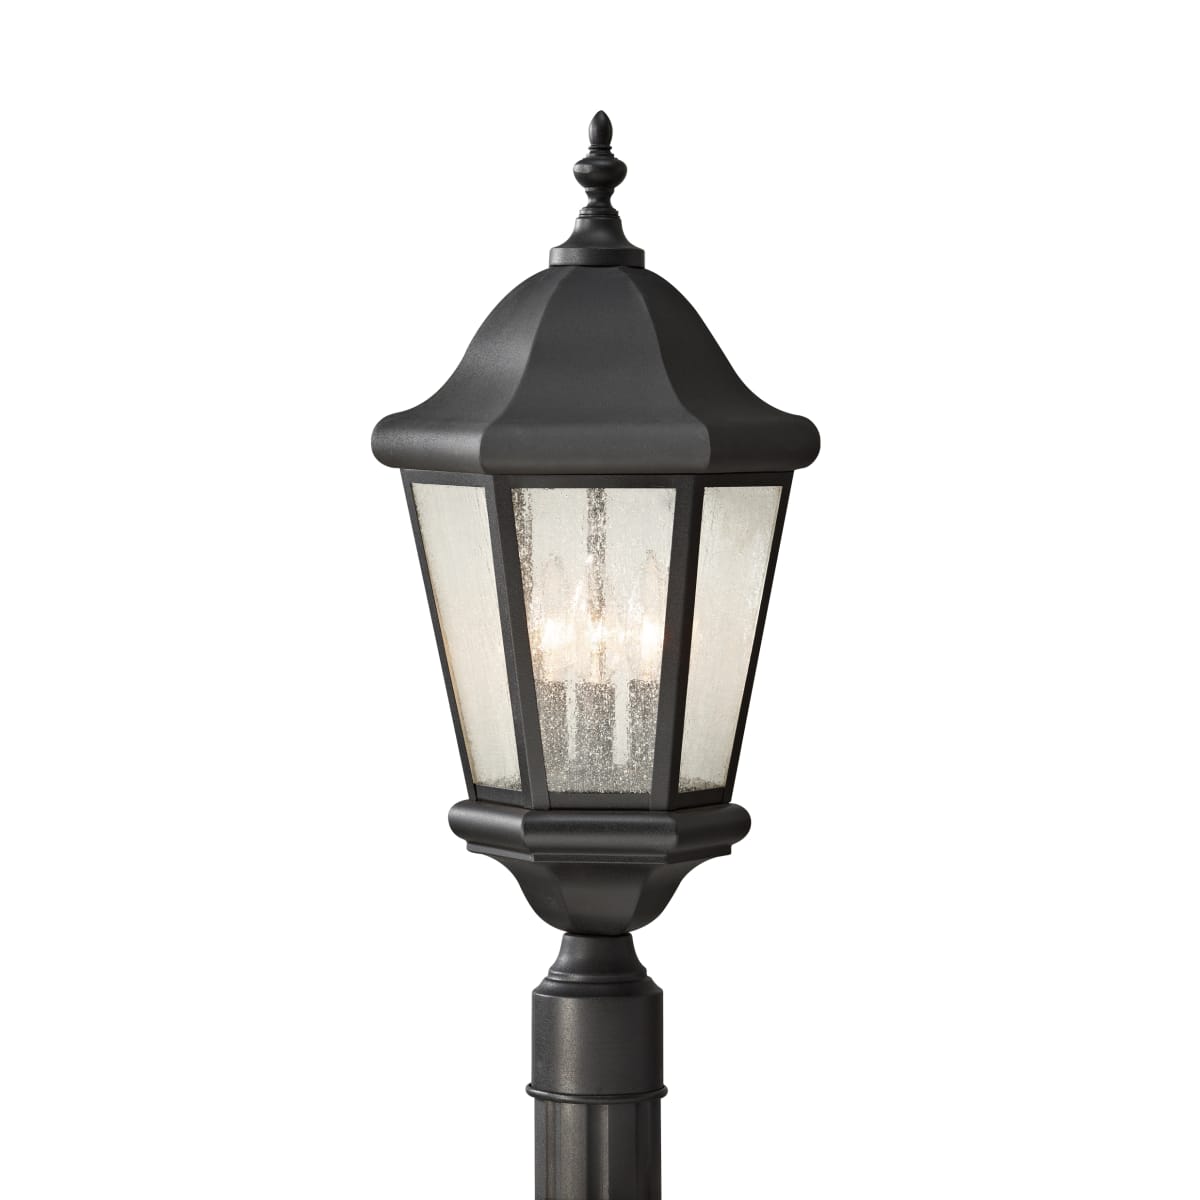 Martinsville Collection - Three Light Outdoor Post Lantern | Finish: Black - OL5907EN/BK